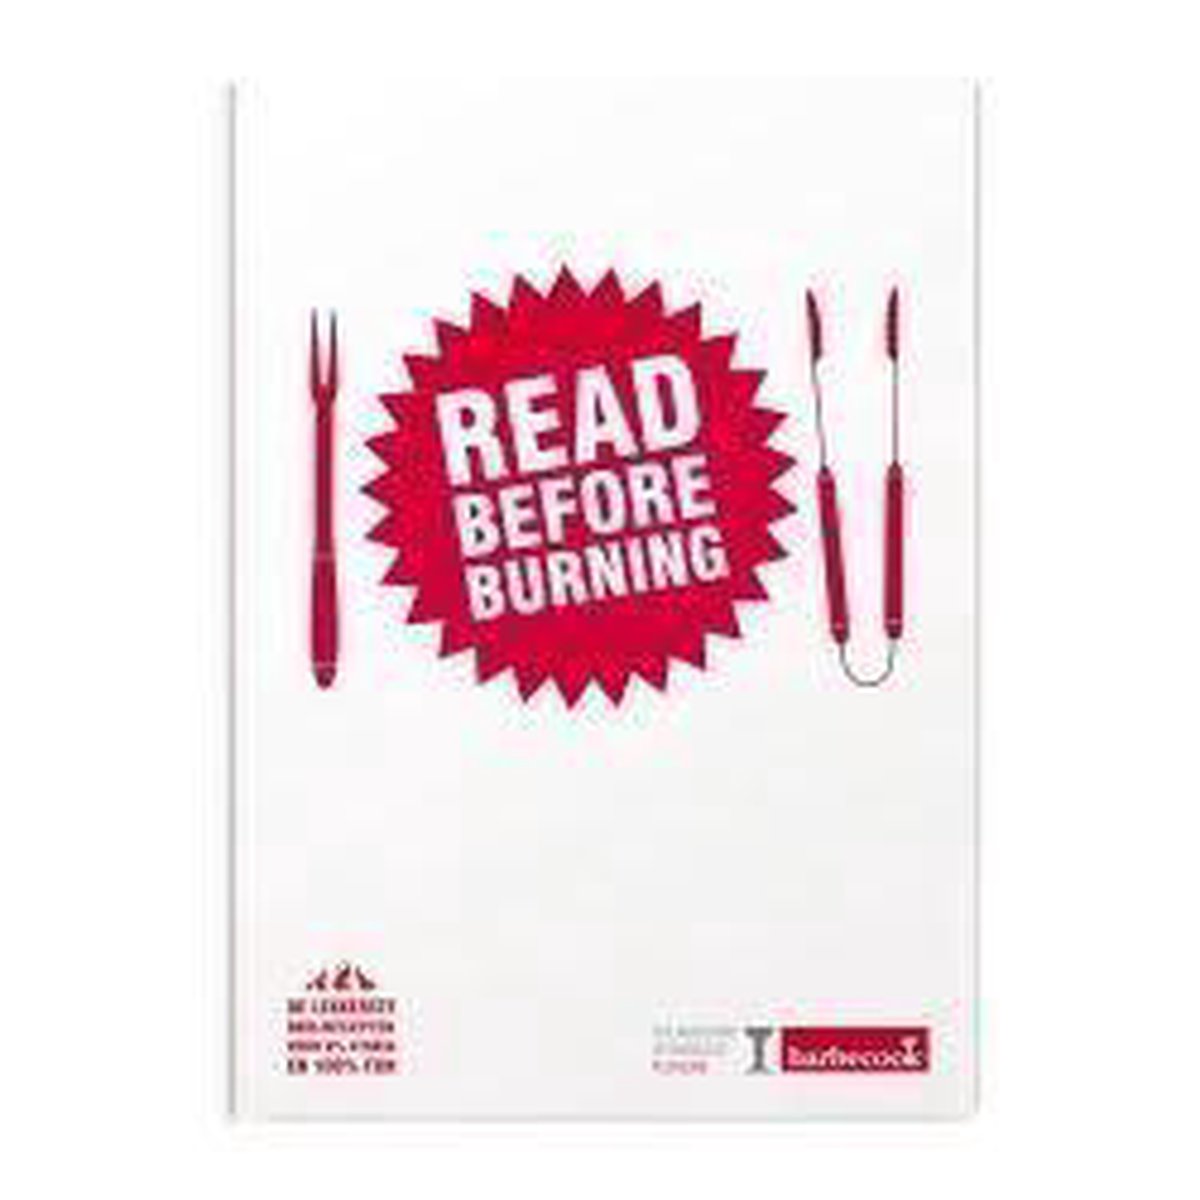 Barbecook boek Read before burning